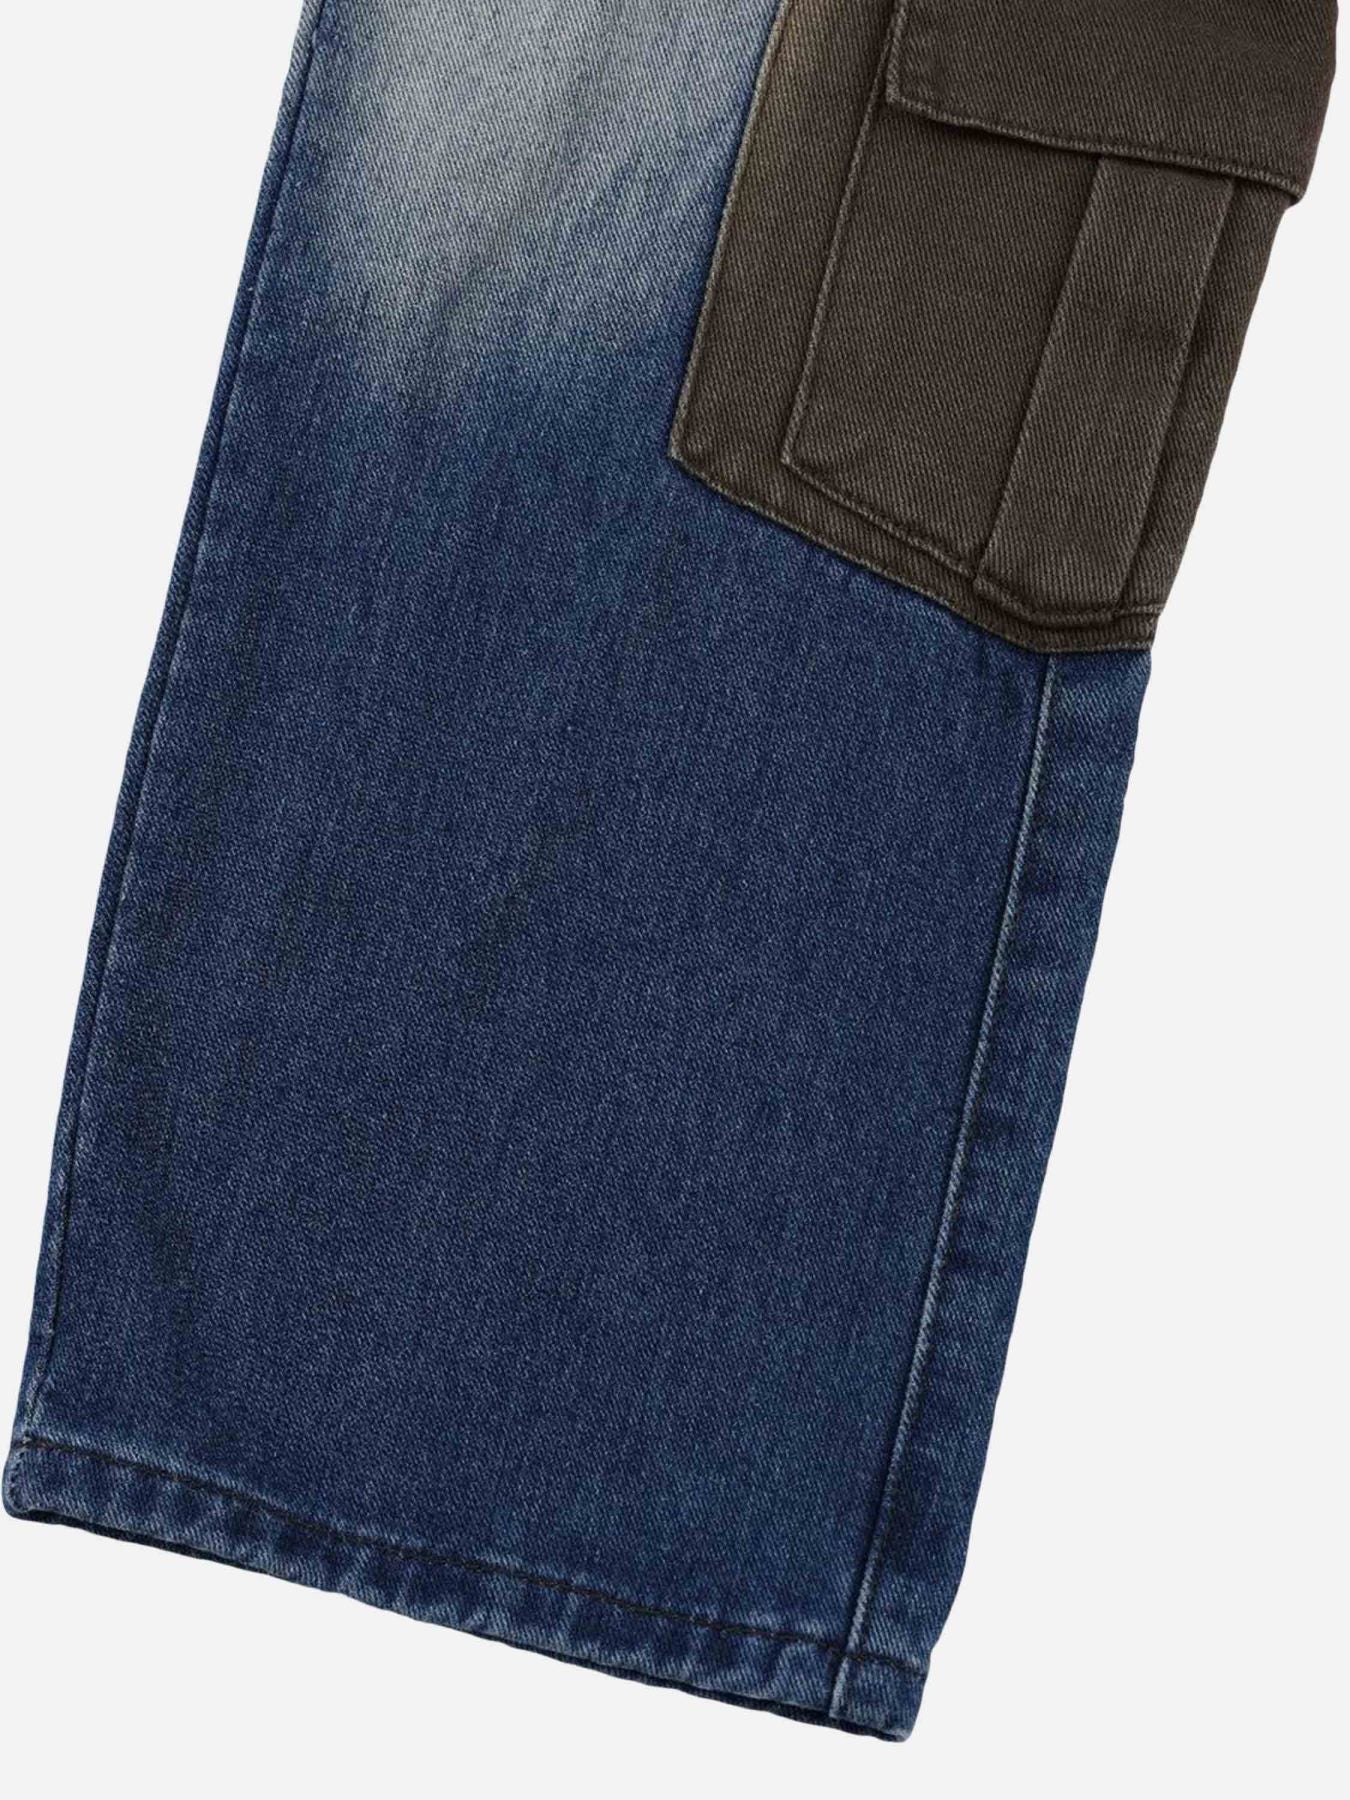 The Supermade Colorblocked Multi-Pocket Airbrushed Denim Work Pants